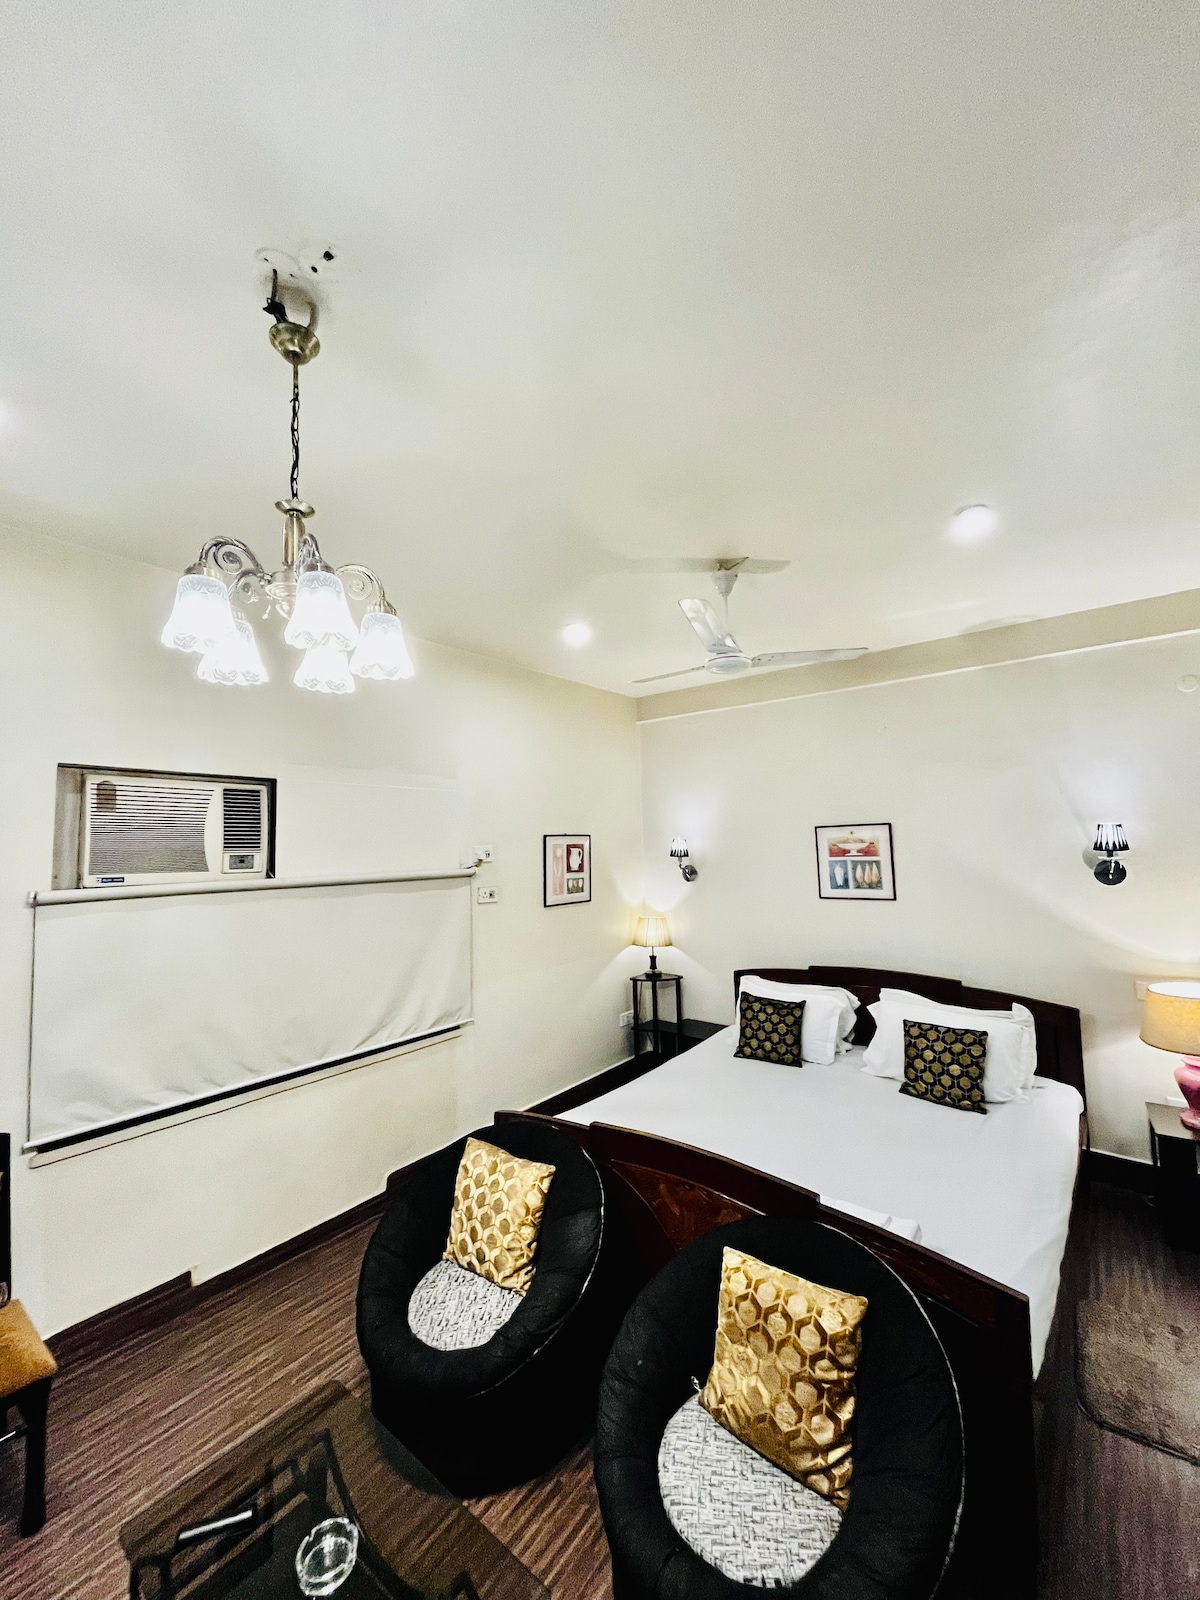 Ballygunge双卧室1000平方英尺的主要公寓路线。